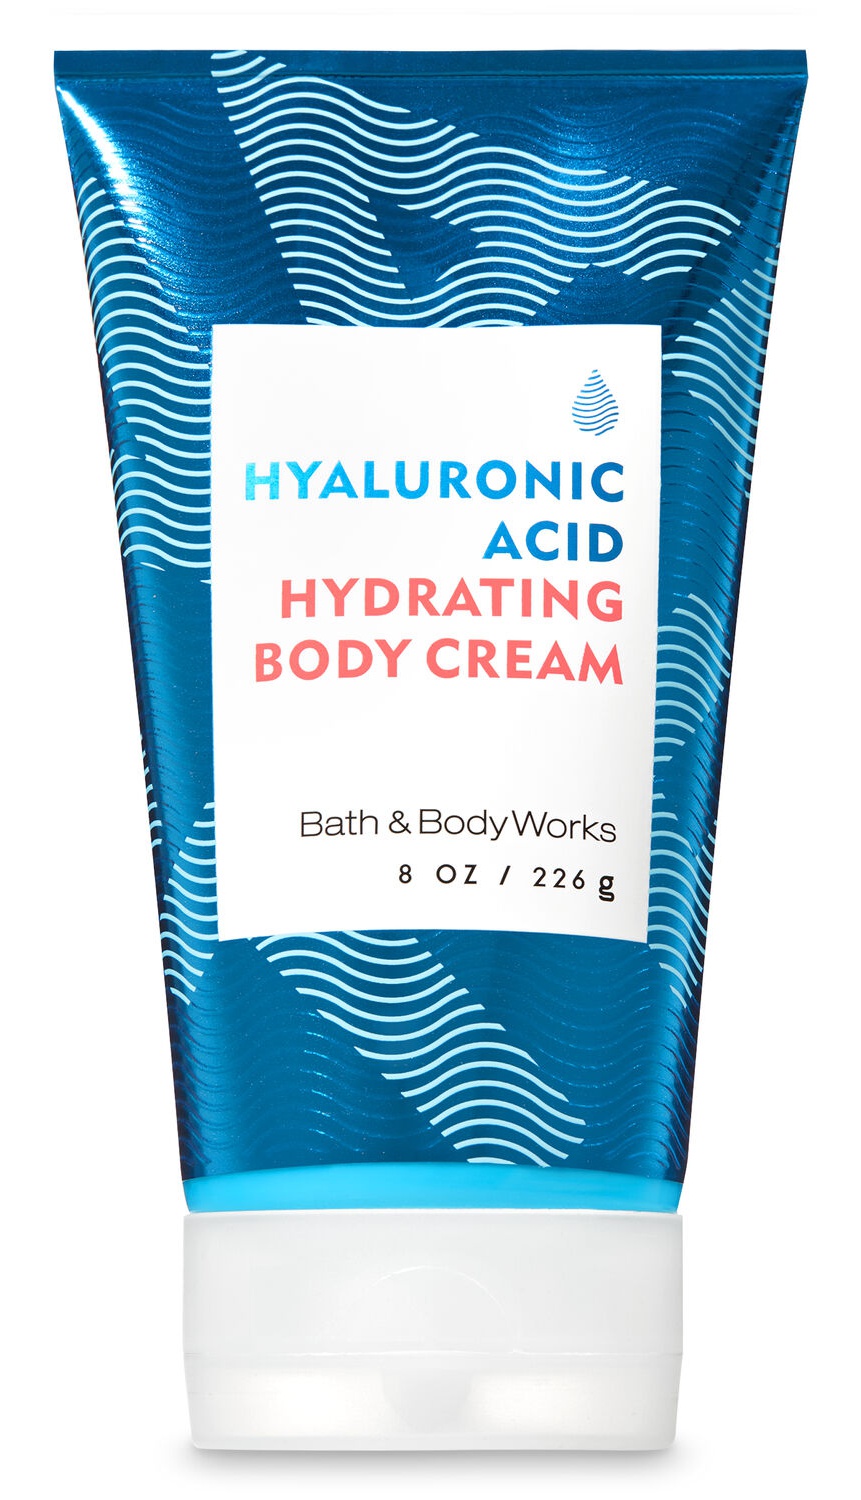 Bath and Body works Hyaluronic Acid Body Cream